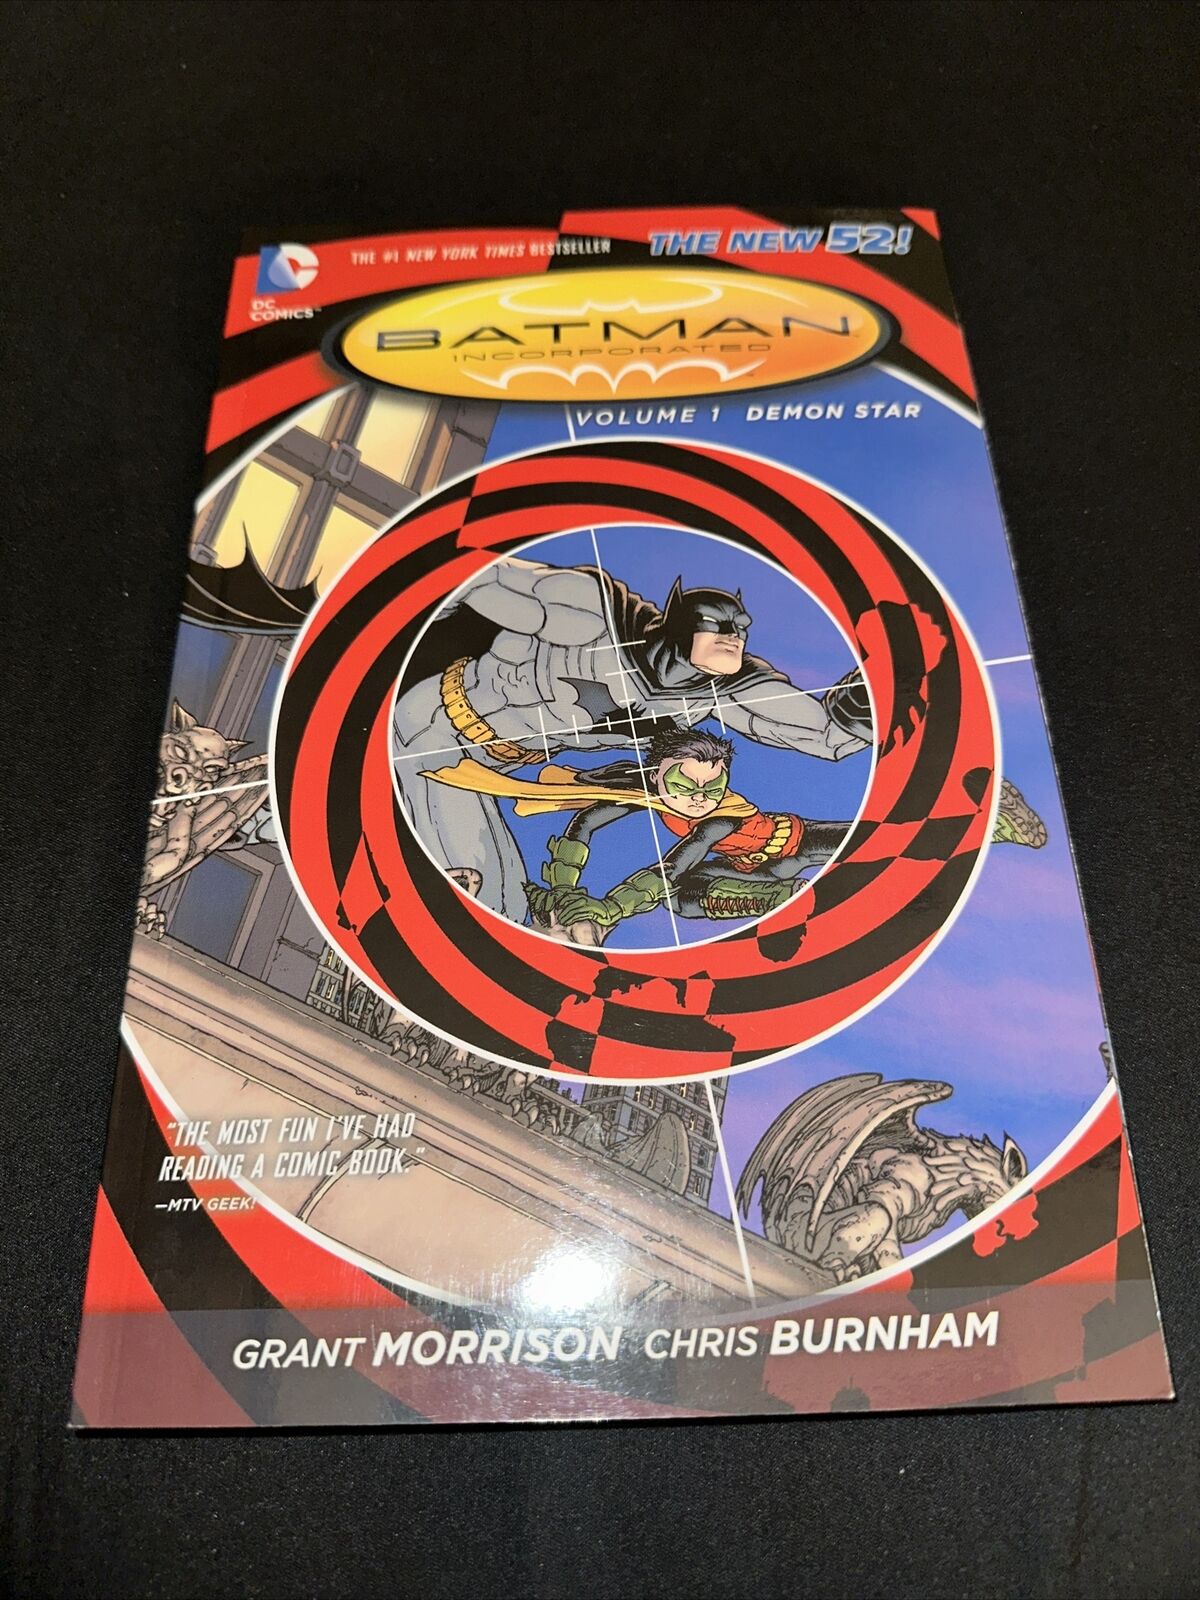 Batman Incorporated Volume 1: Demon Star SC (The New 52), Grant Morrison